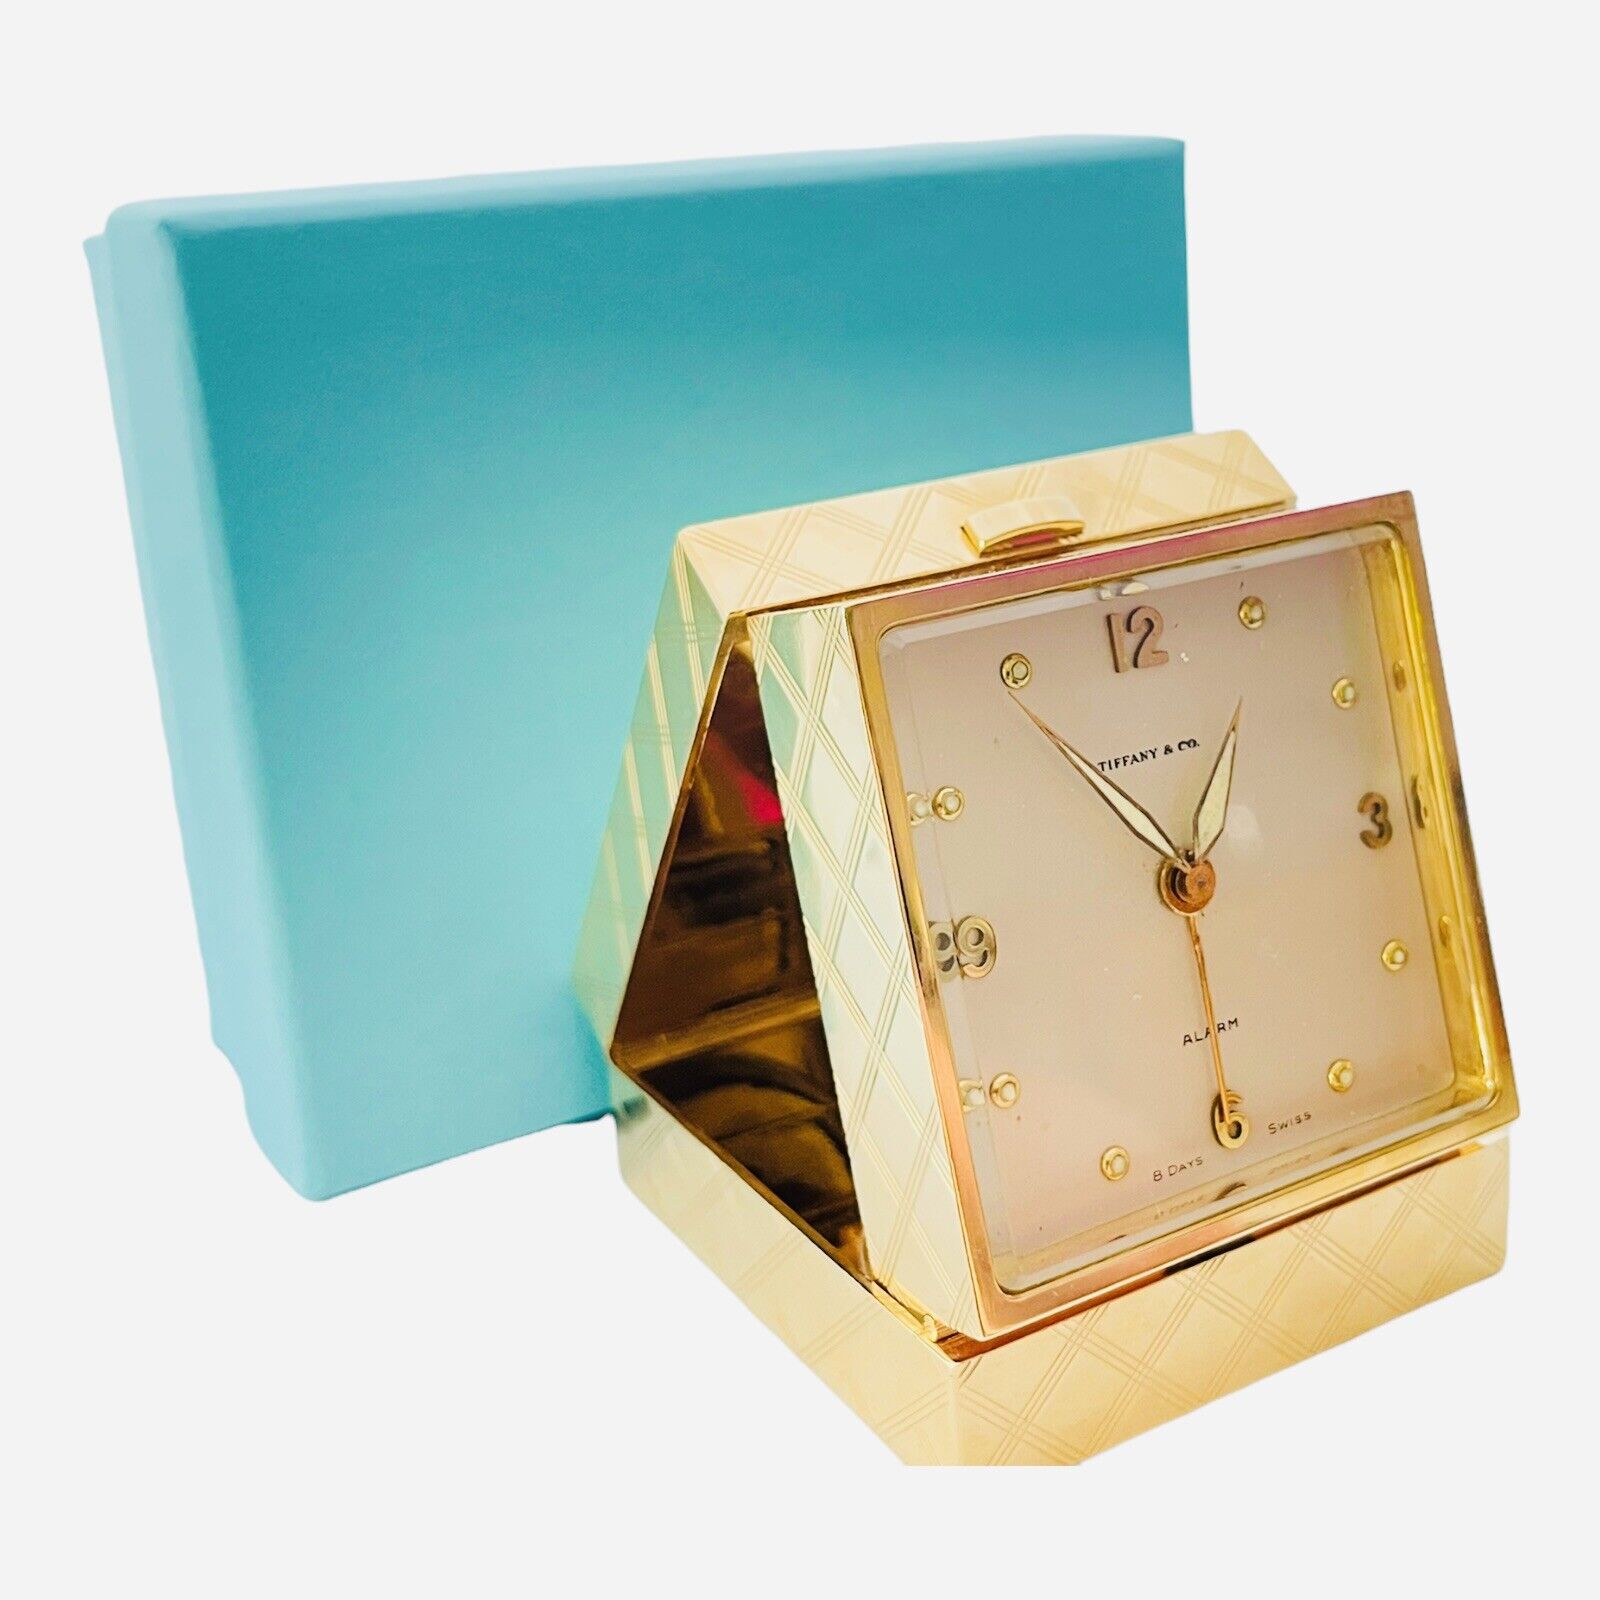 Tiffany & Co 14k Solid Gold Travel/Desk Alarm Clock, Exceptionally RARE & HEAVY